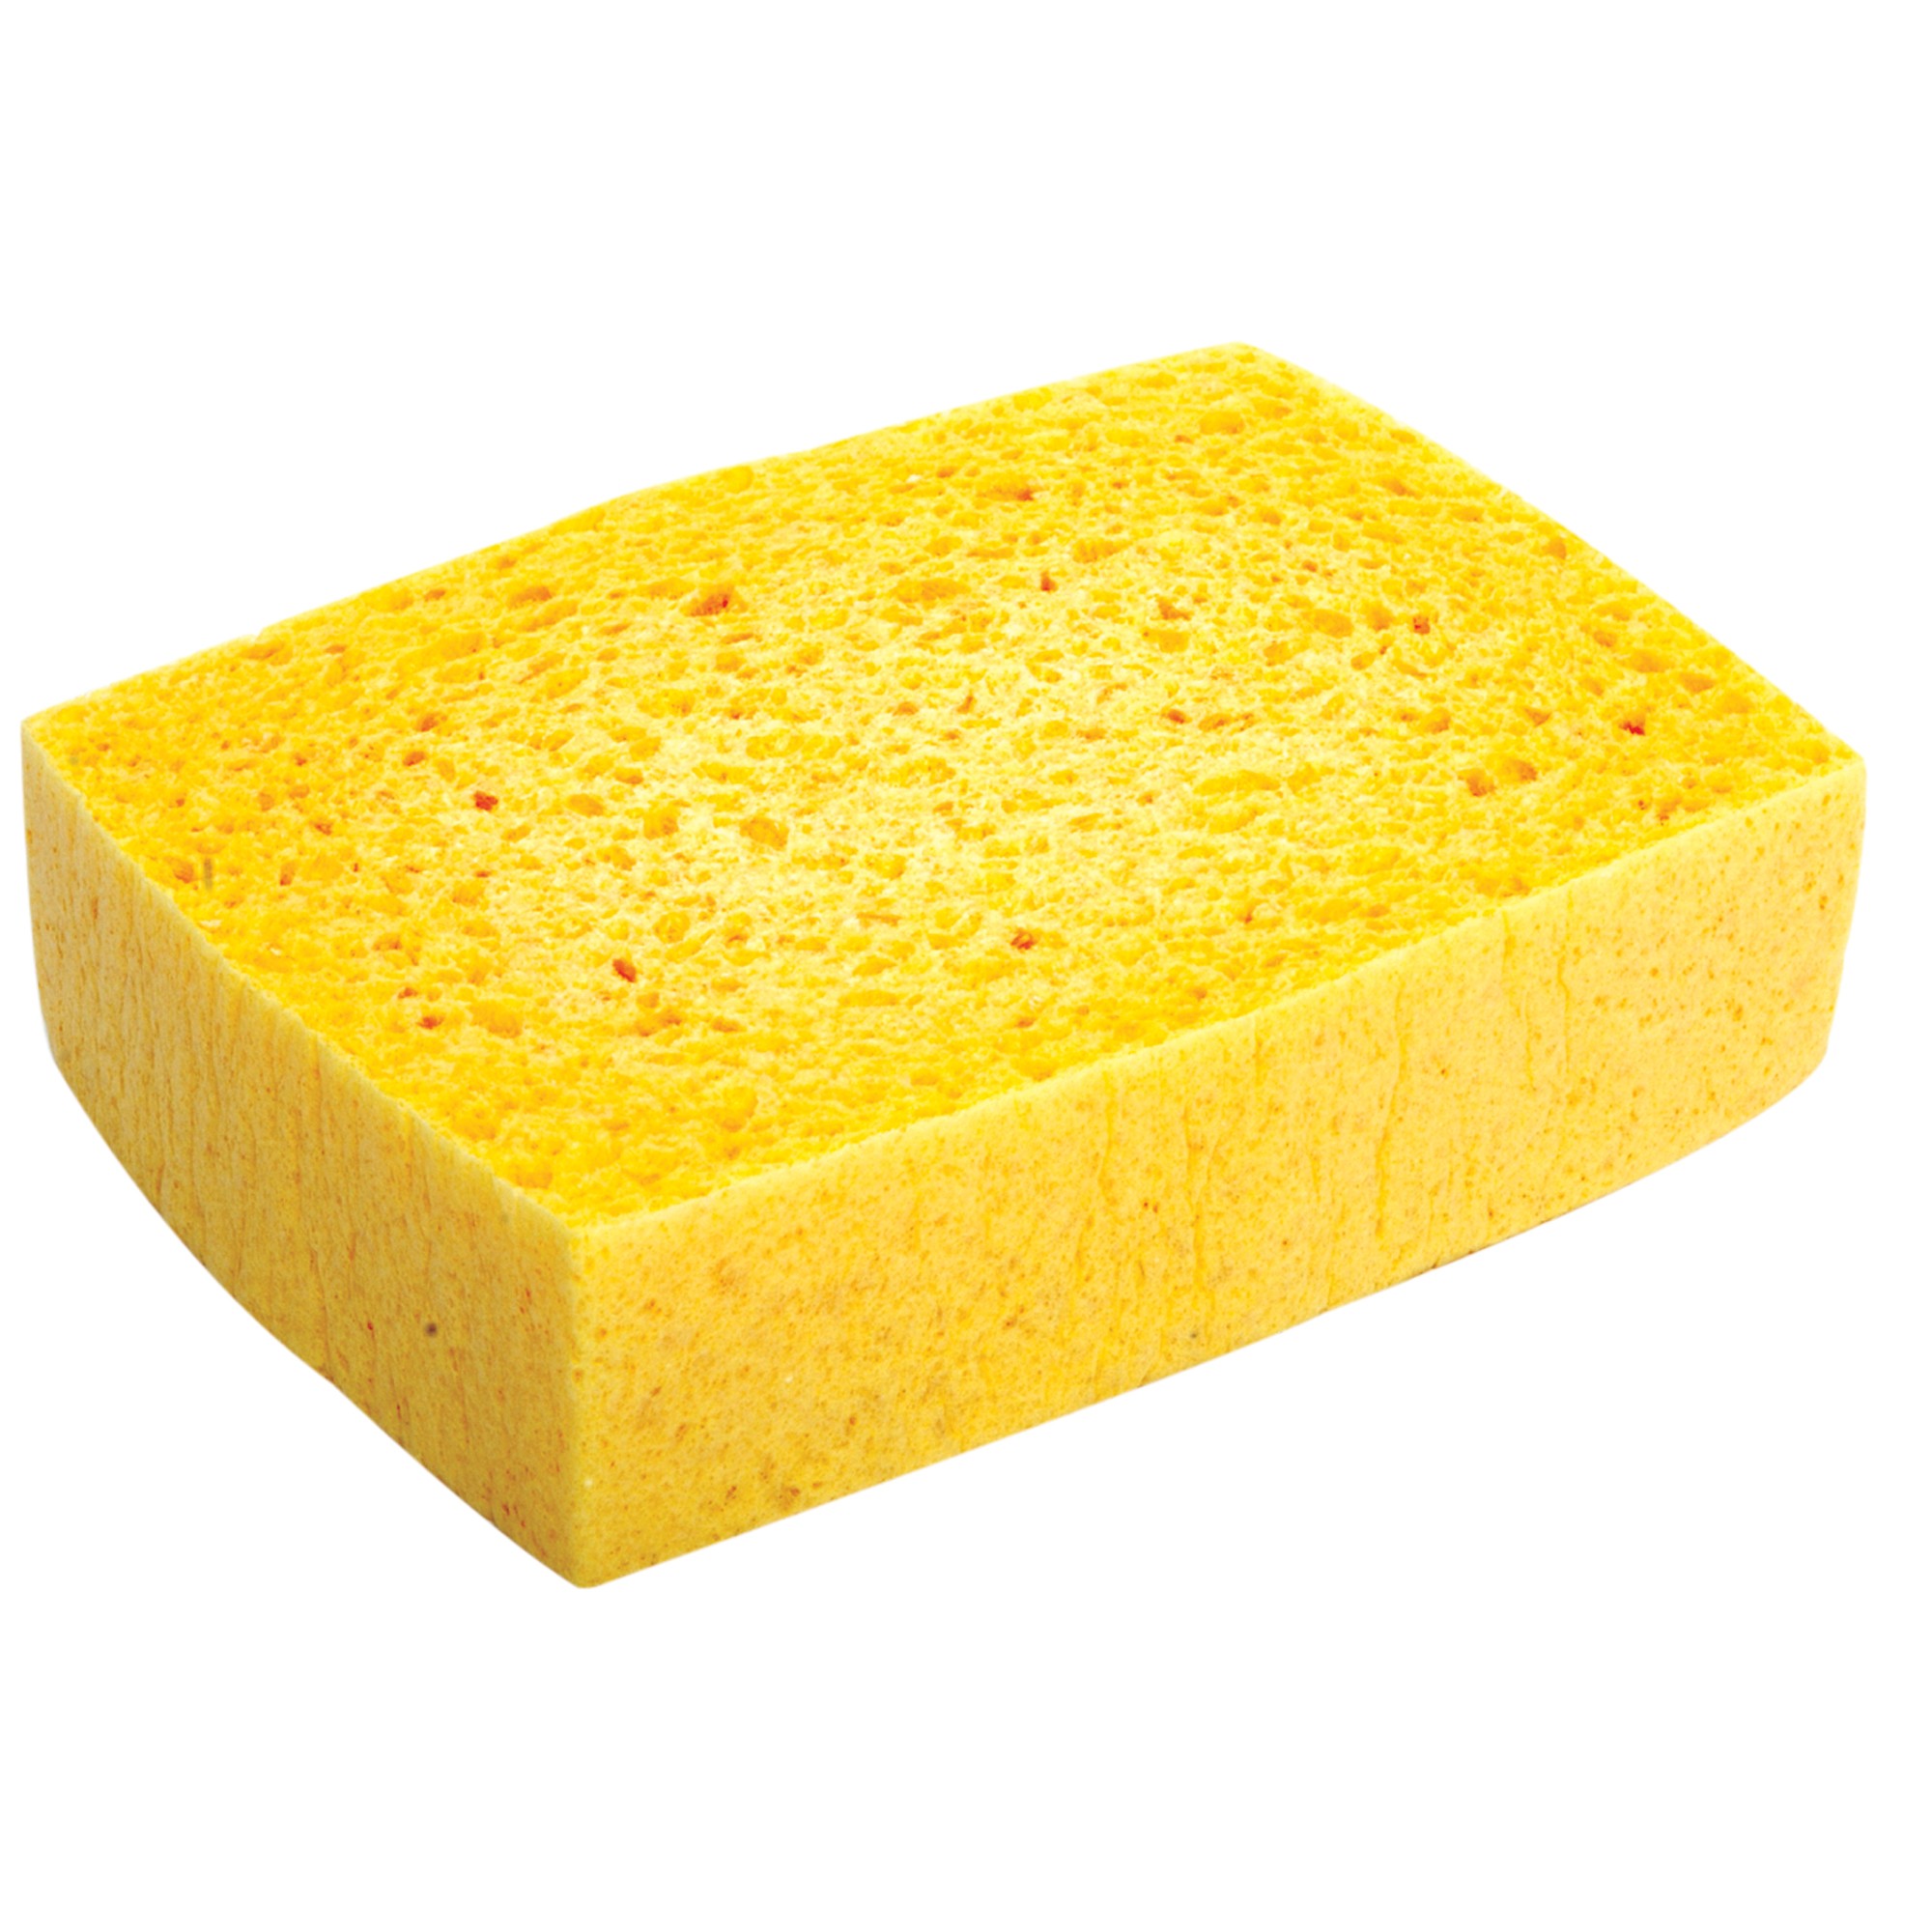 a sponge